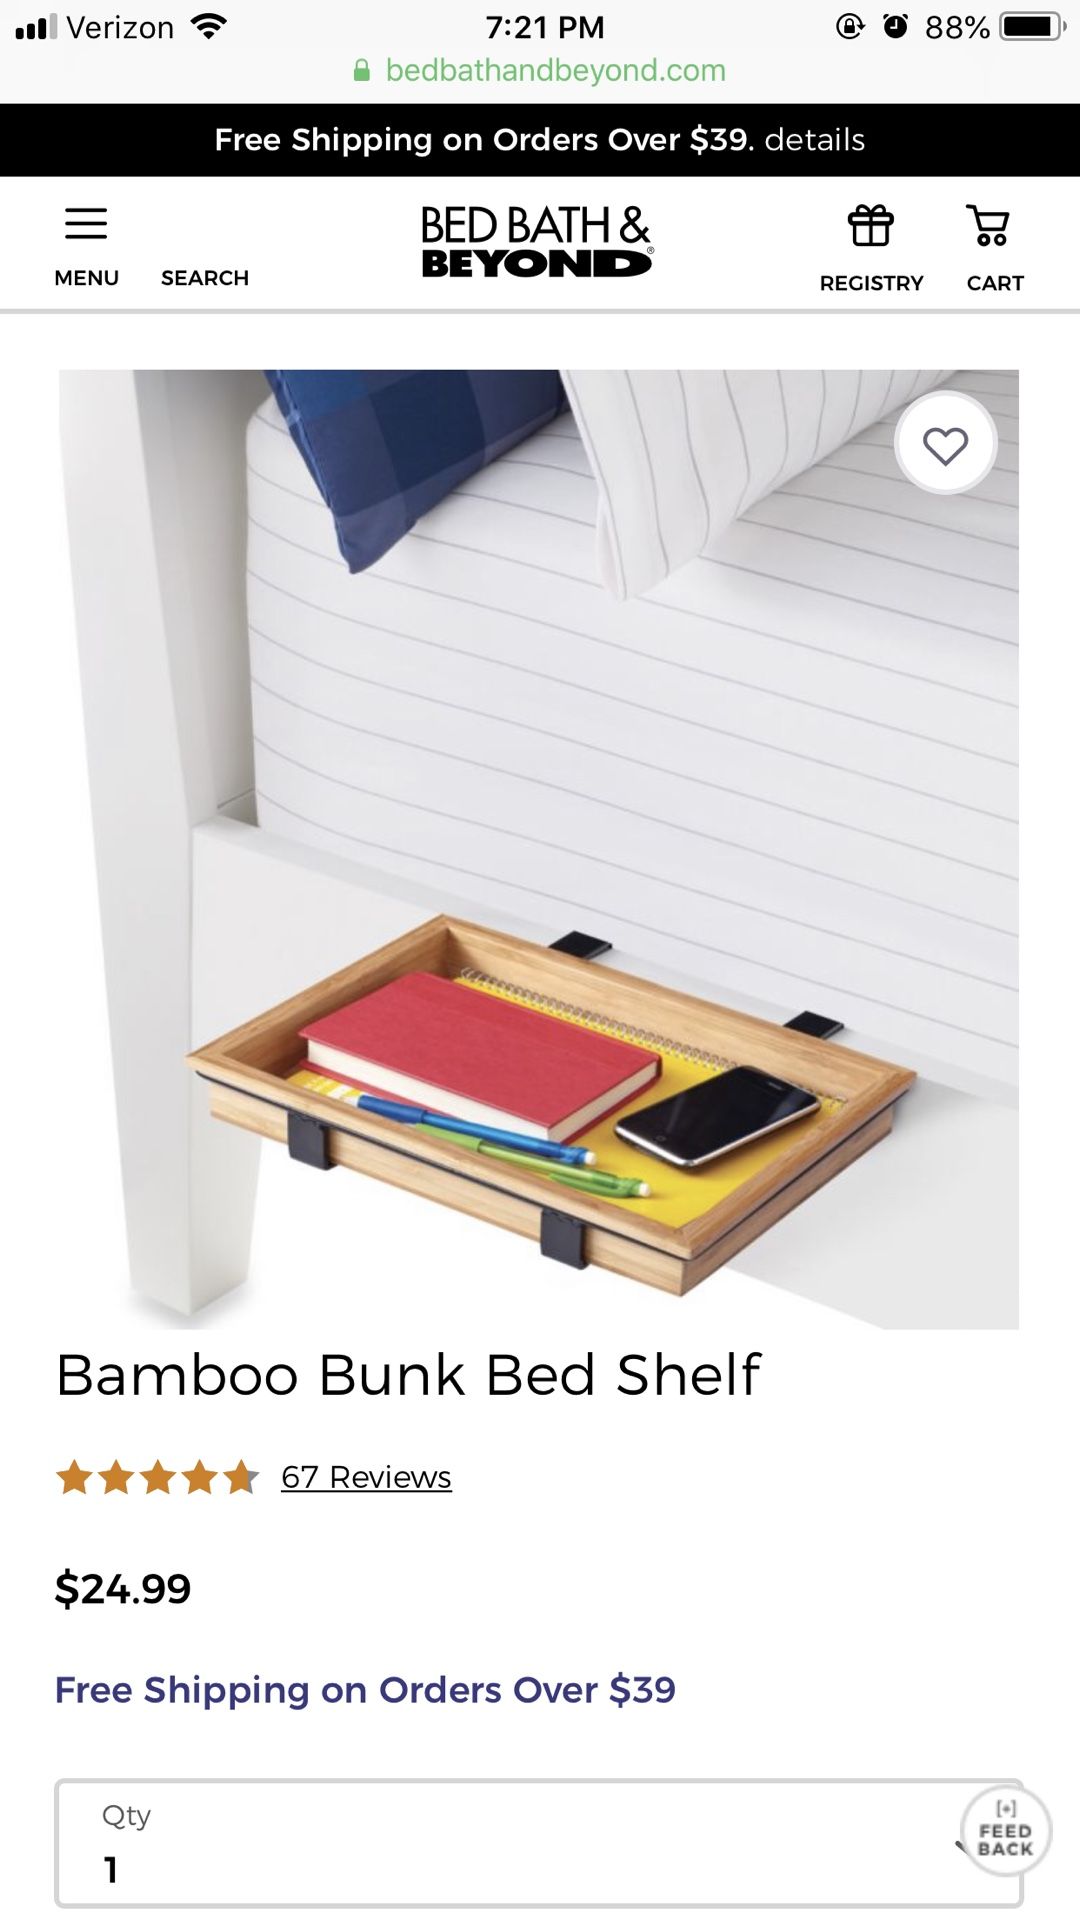 Bamboo bunk bed shelf